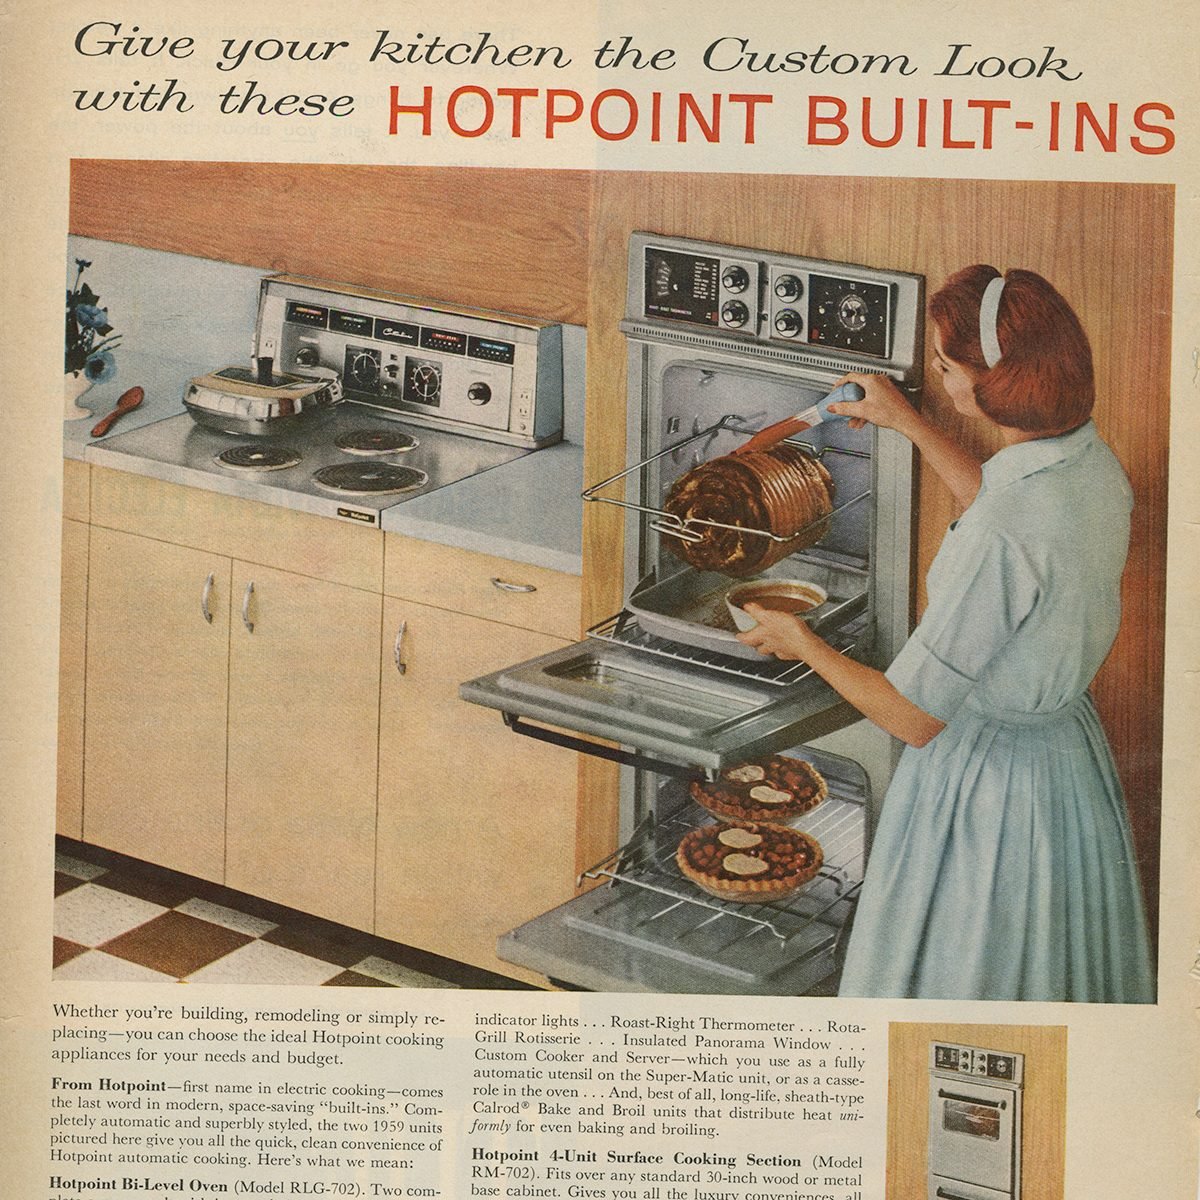 5 Vintage Kitchen Appliances You Should Have For Your Kitchen